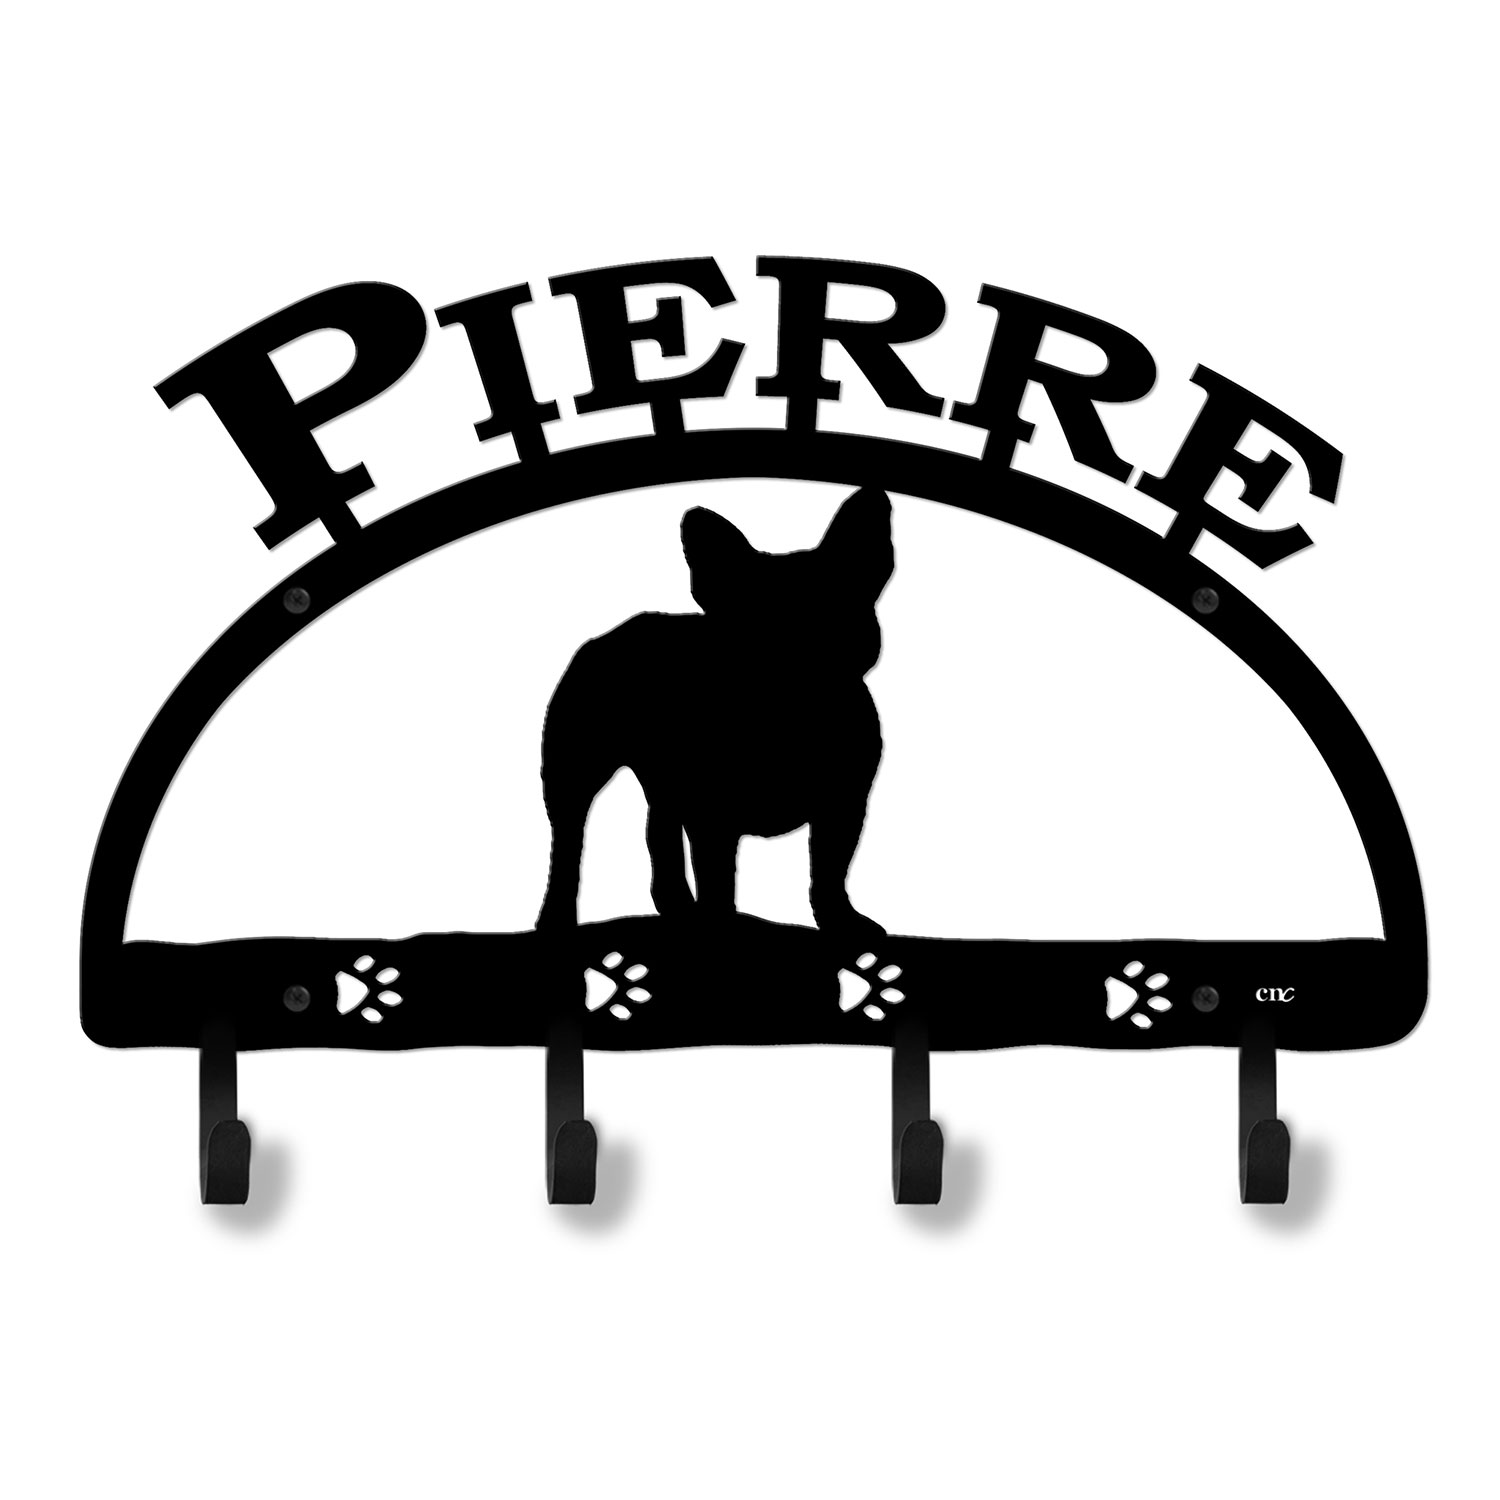 601508 - French Bulldog Personalized Dog Accessory Wall Hooks